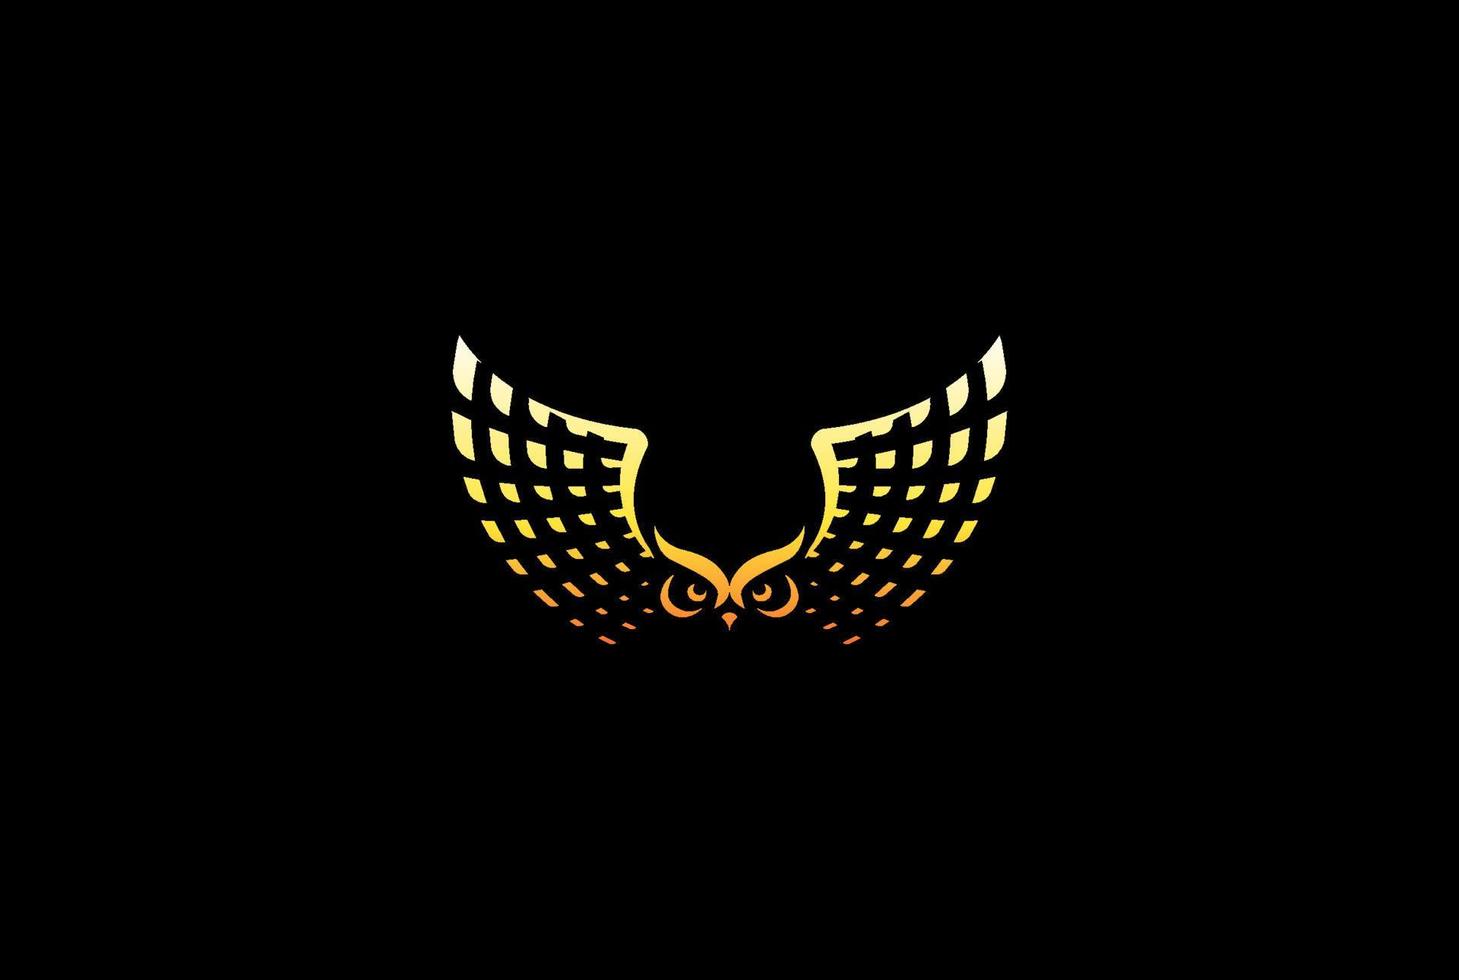 vetor de design de logotipo de asas de pássaro de coruja voadora de luxo geométrico